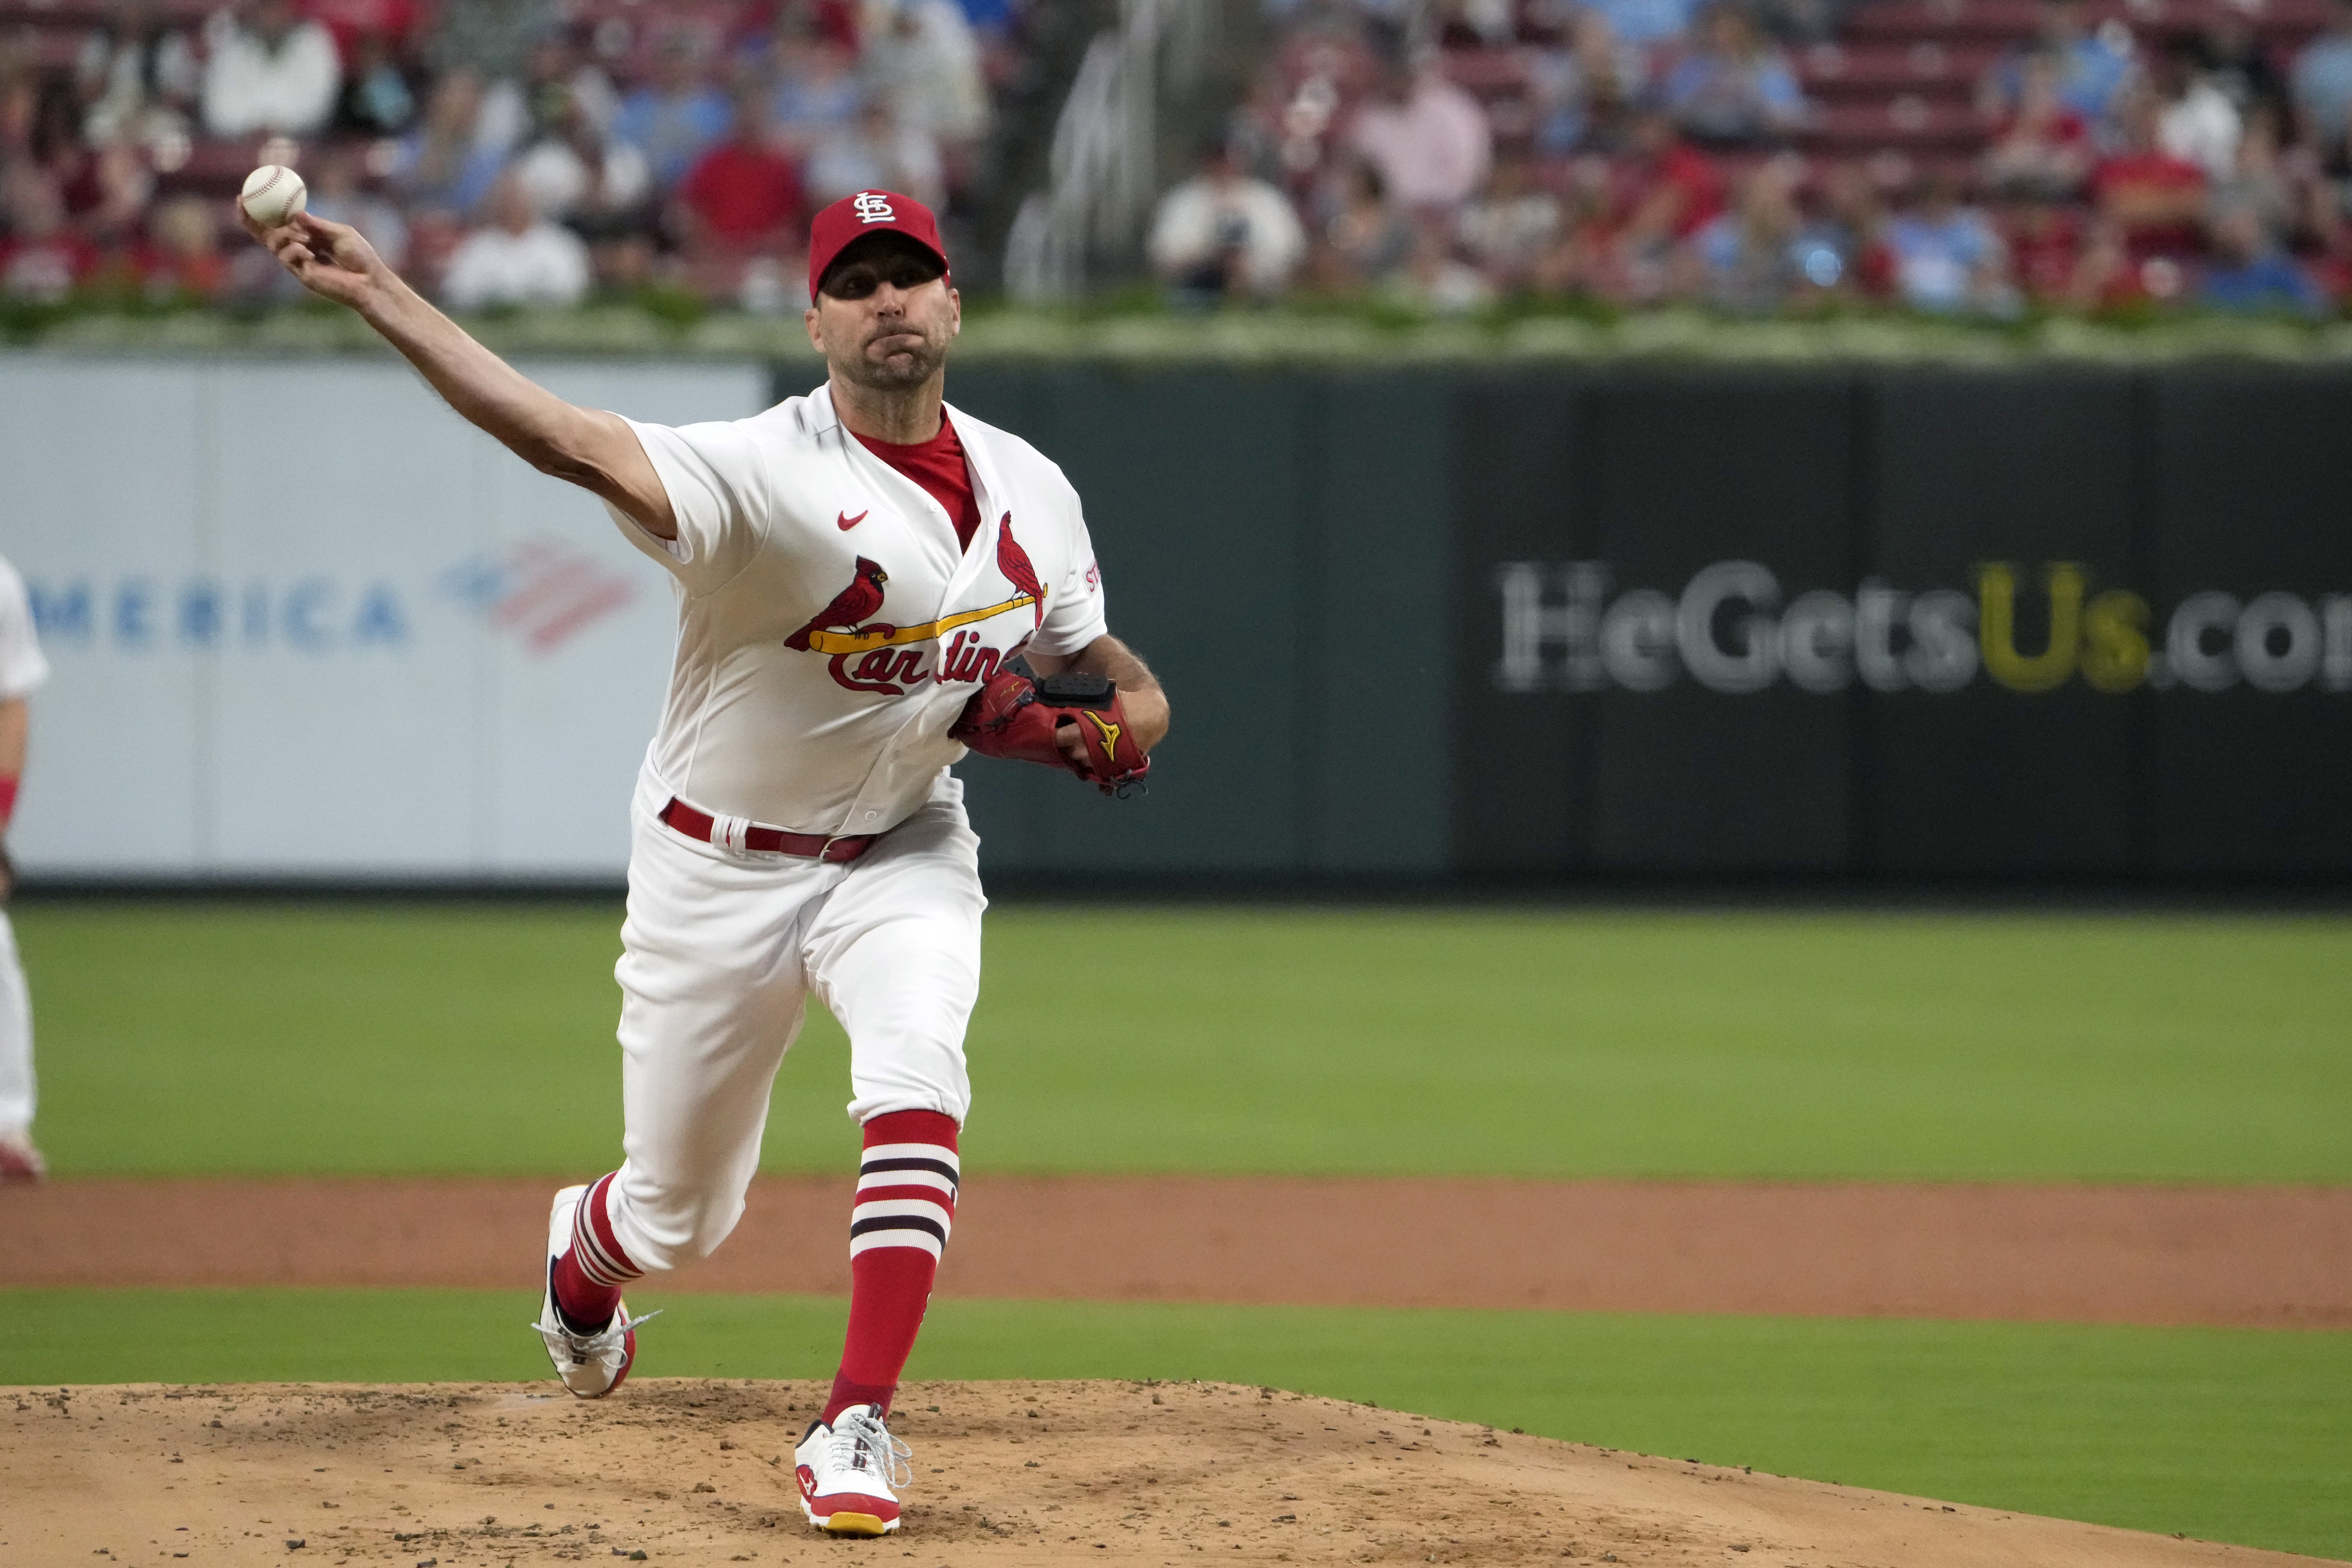 St. Louis Cardinals pitcher Adam Wainwright injures elbow, could